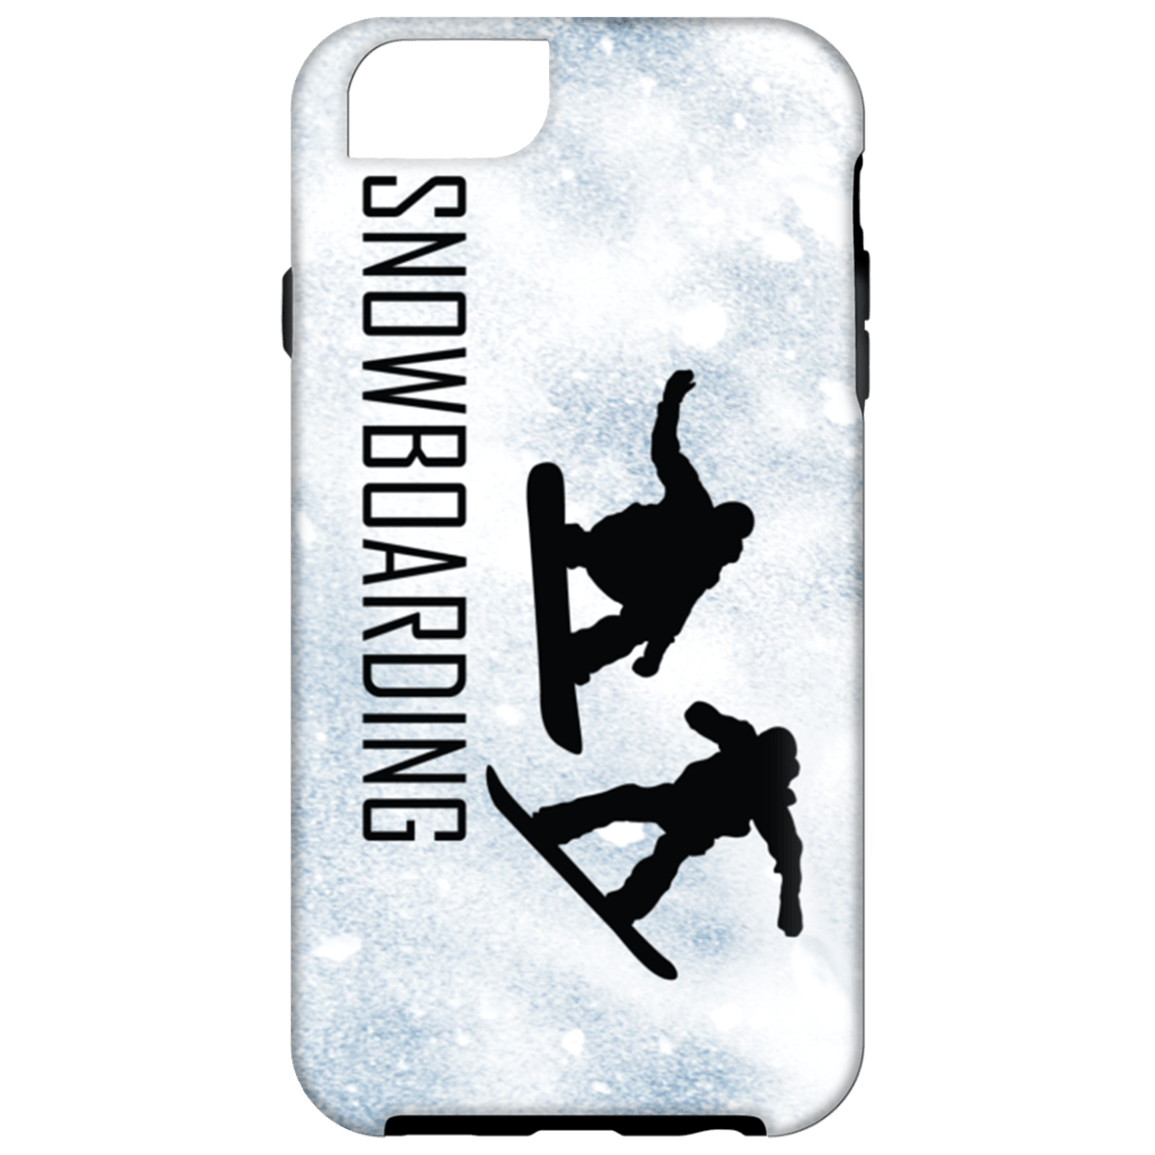 Snowboarder's Jump Phone Cases - Powderaddicts